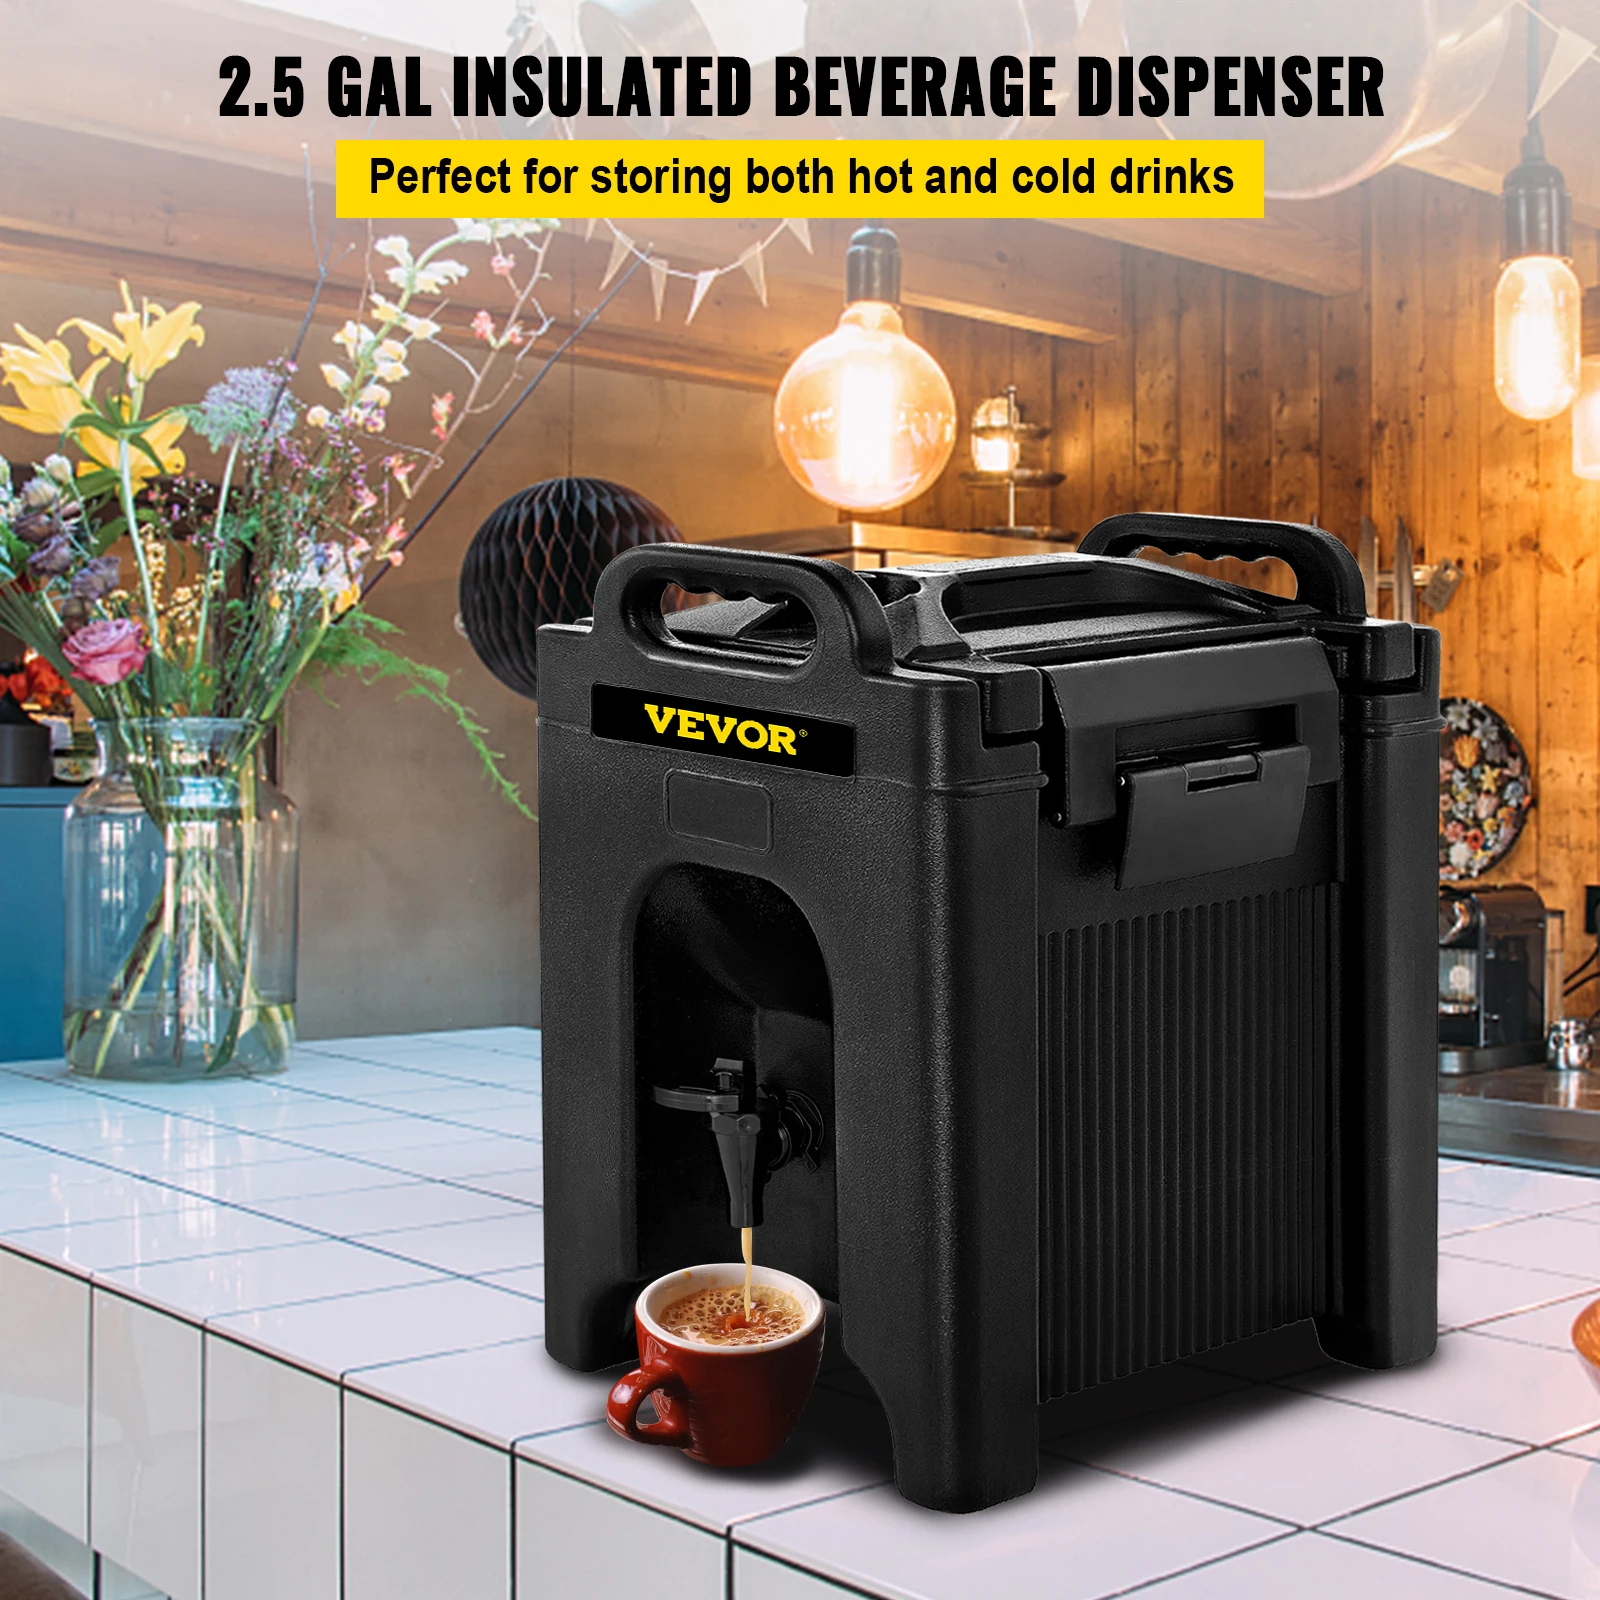 https://ae01.alicdn.com/kf/S7067c1dbc5db46bab48713c9d5bcfcedg/VEVOR-Insulated-Beverage-Dispenser-2-5-5-Gal-Double-Walled-Beverage-Server-w-PU-Insulation-Layer.jpg